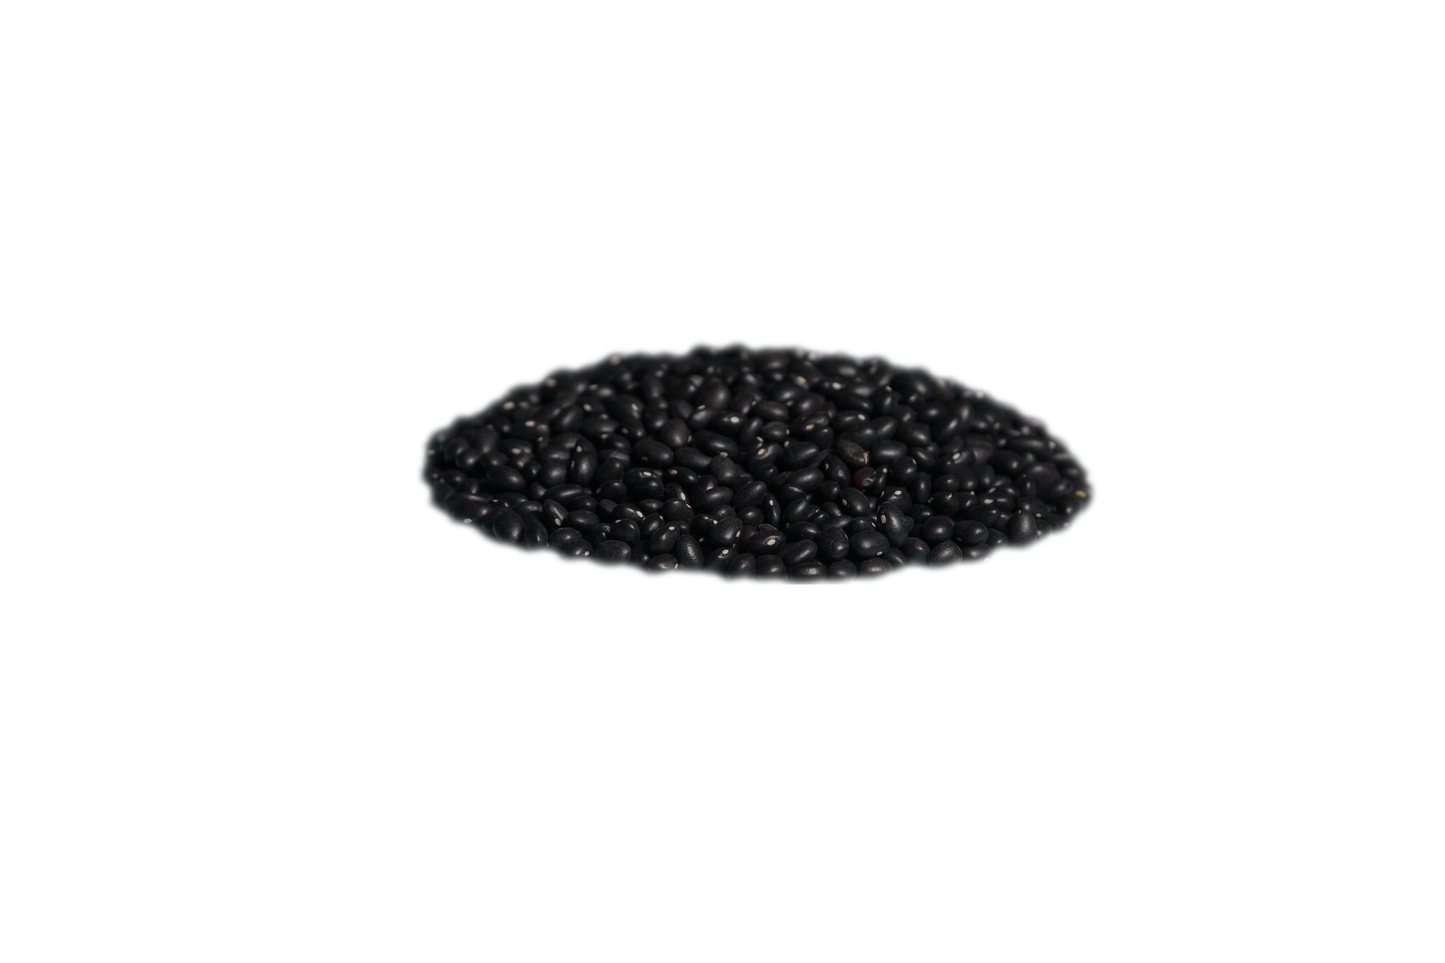 Frijols negro / Black beans